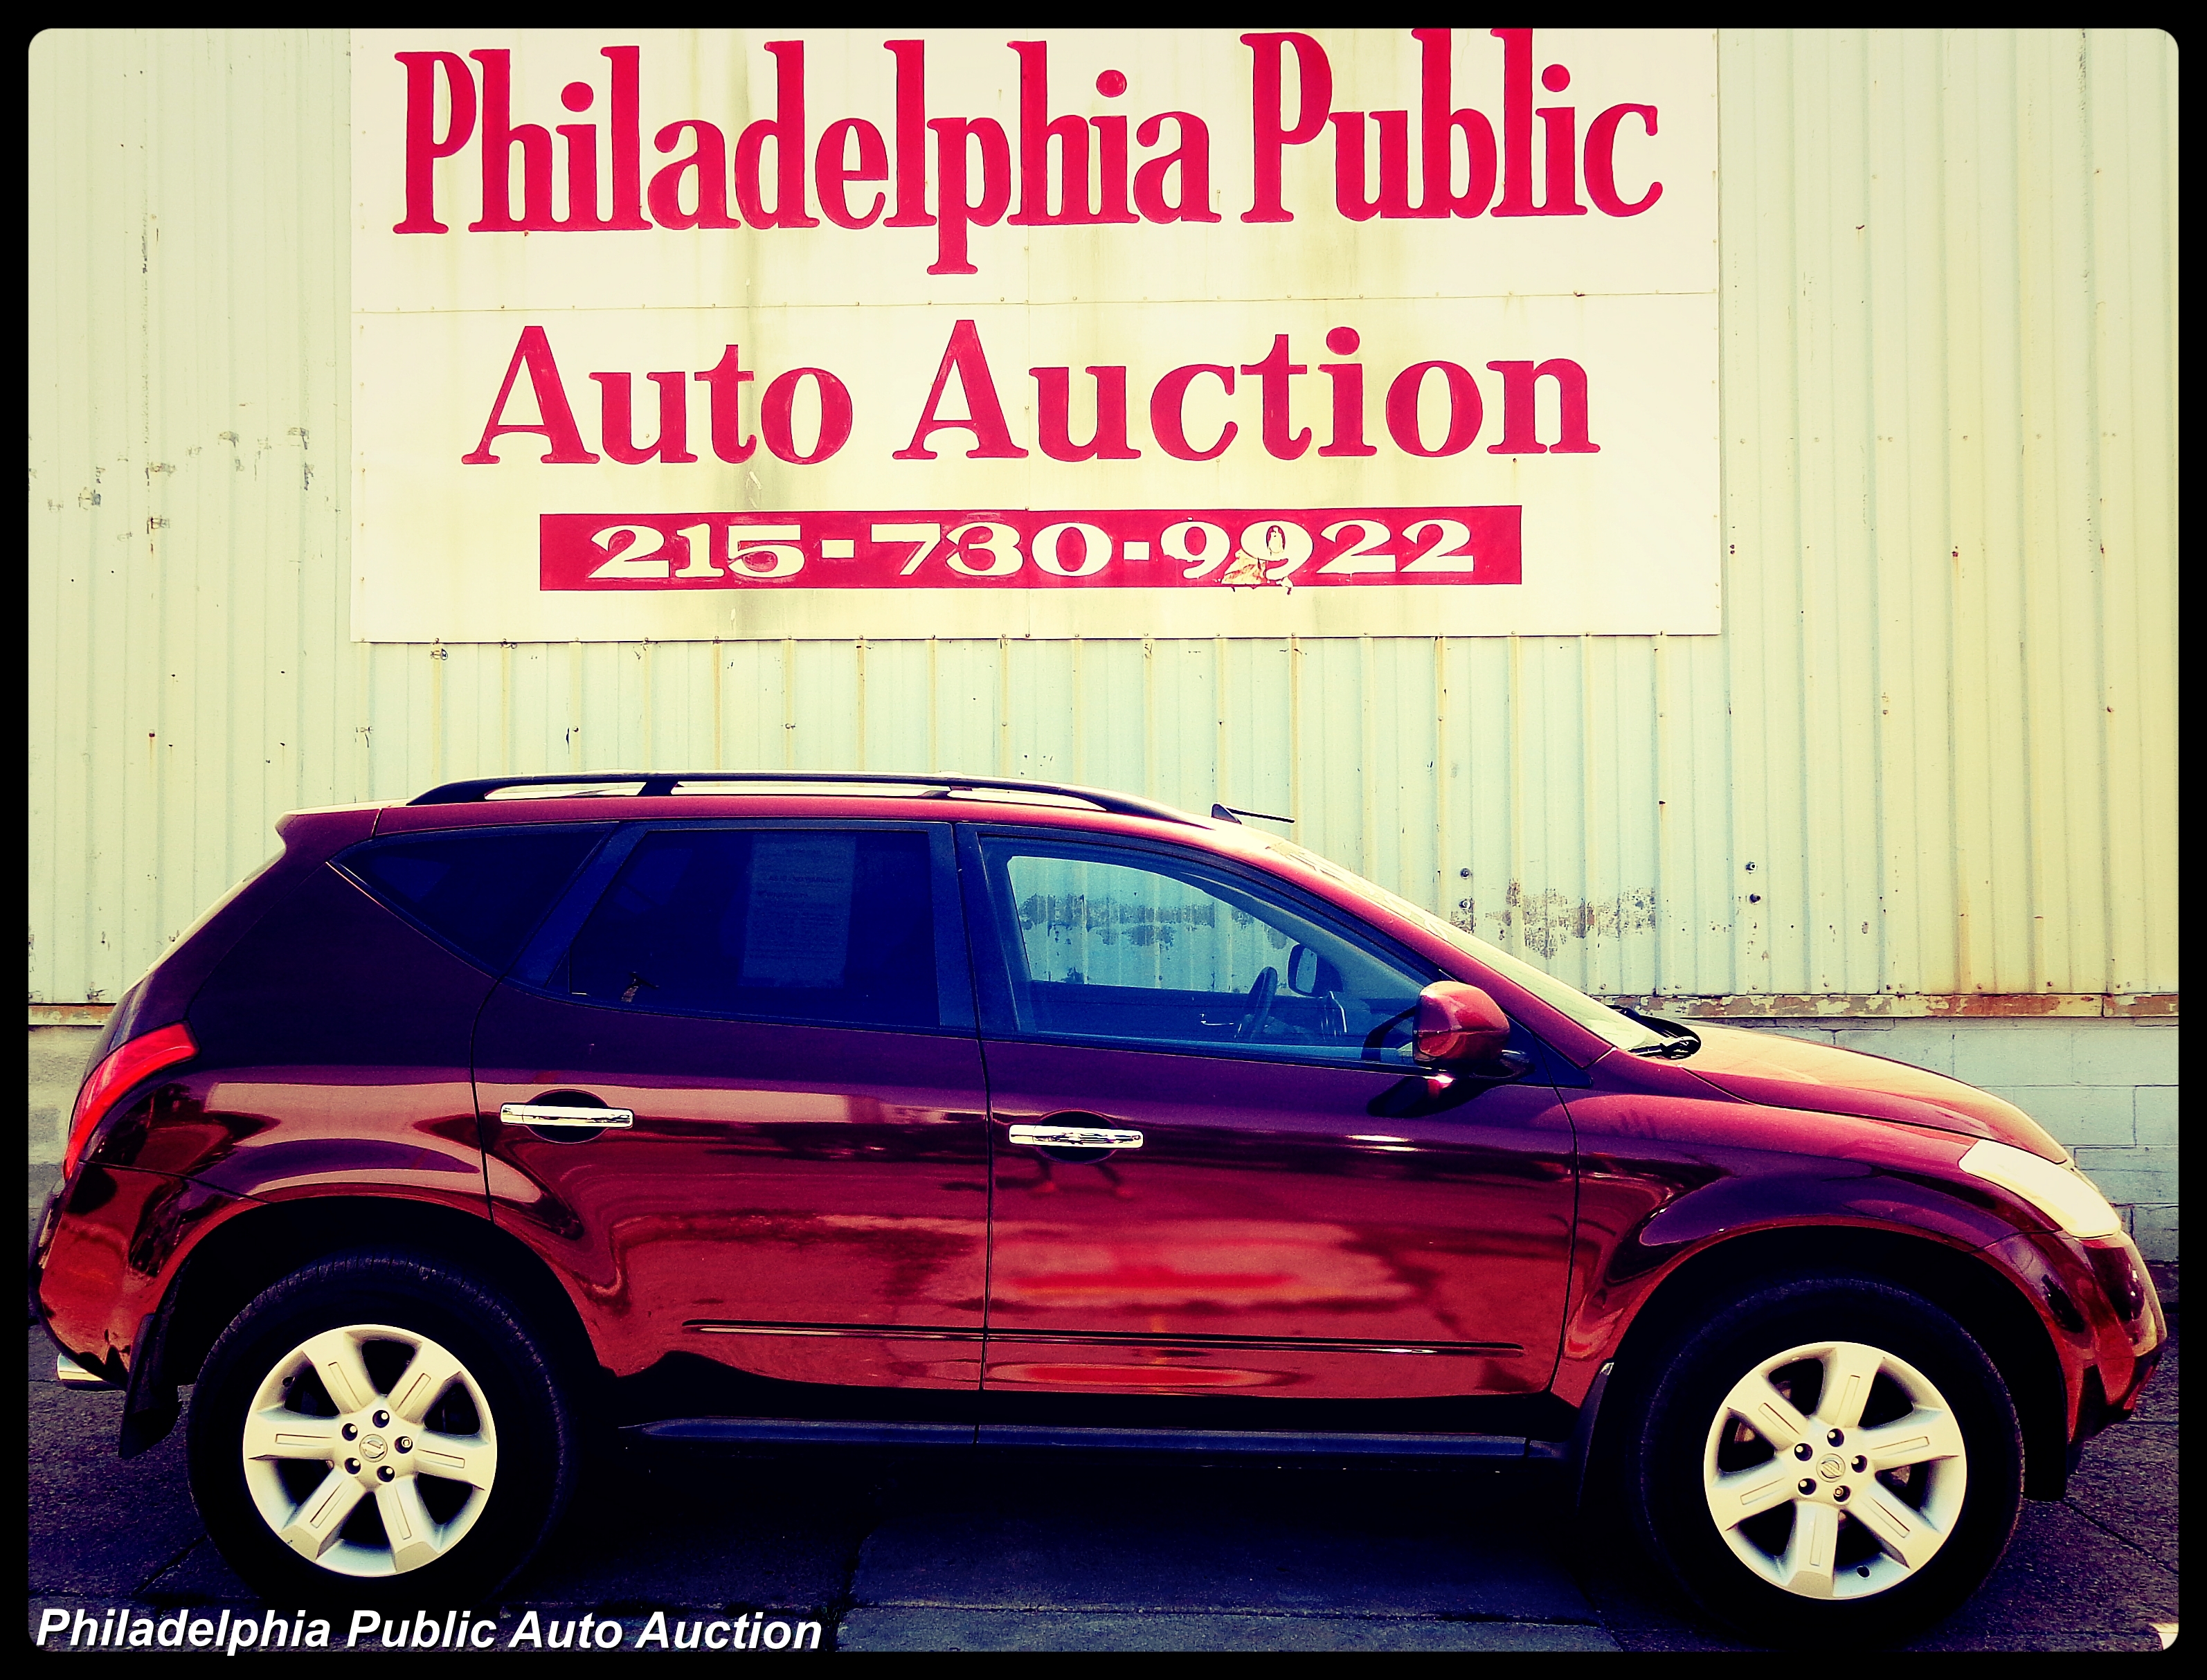 Philadelphia Public Auto-Auction Coupons near me in Philadelphia | 8coupons